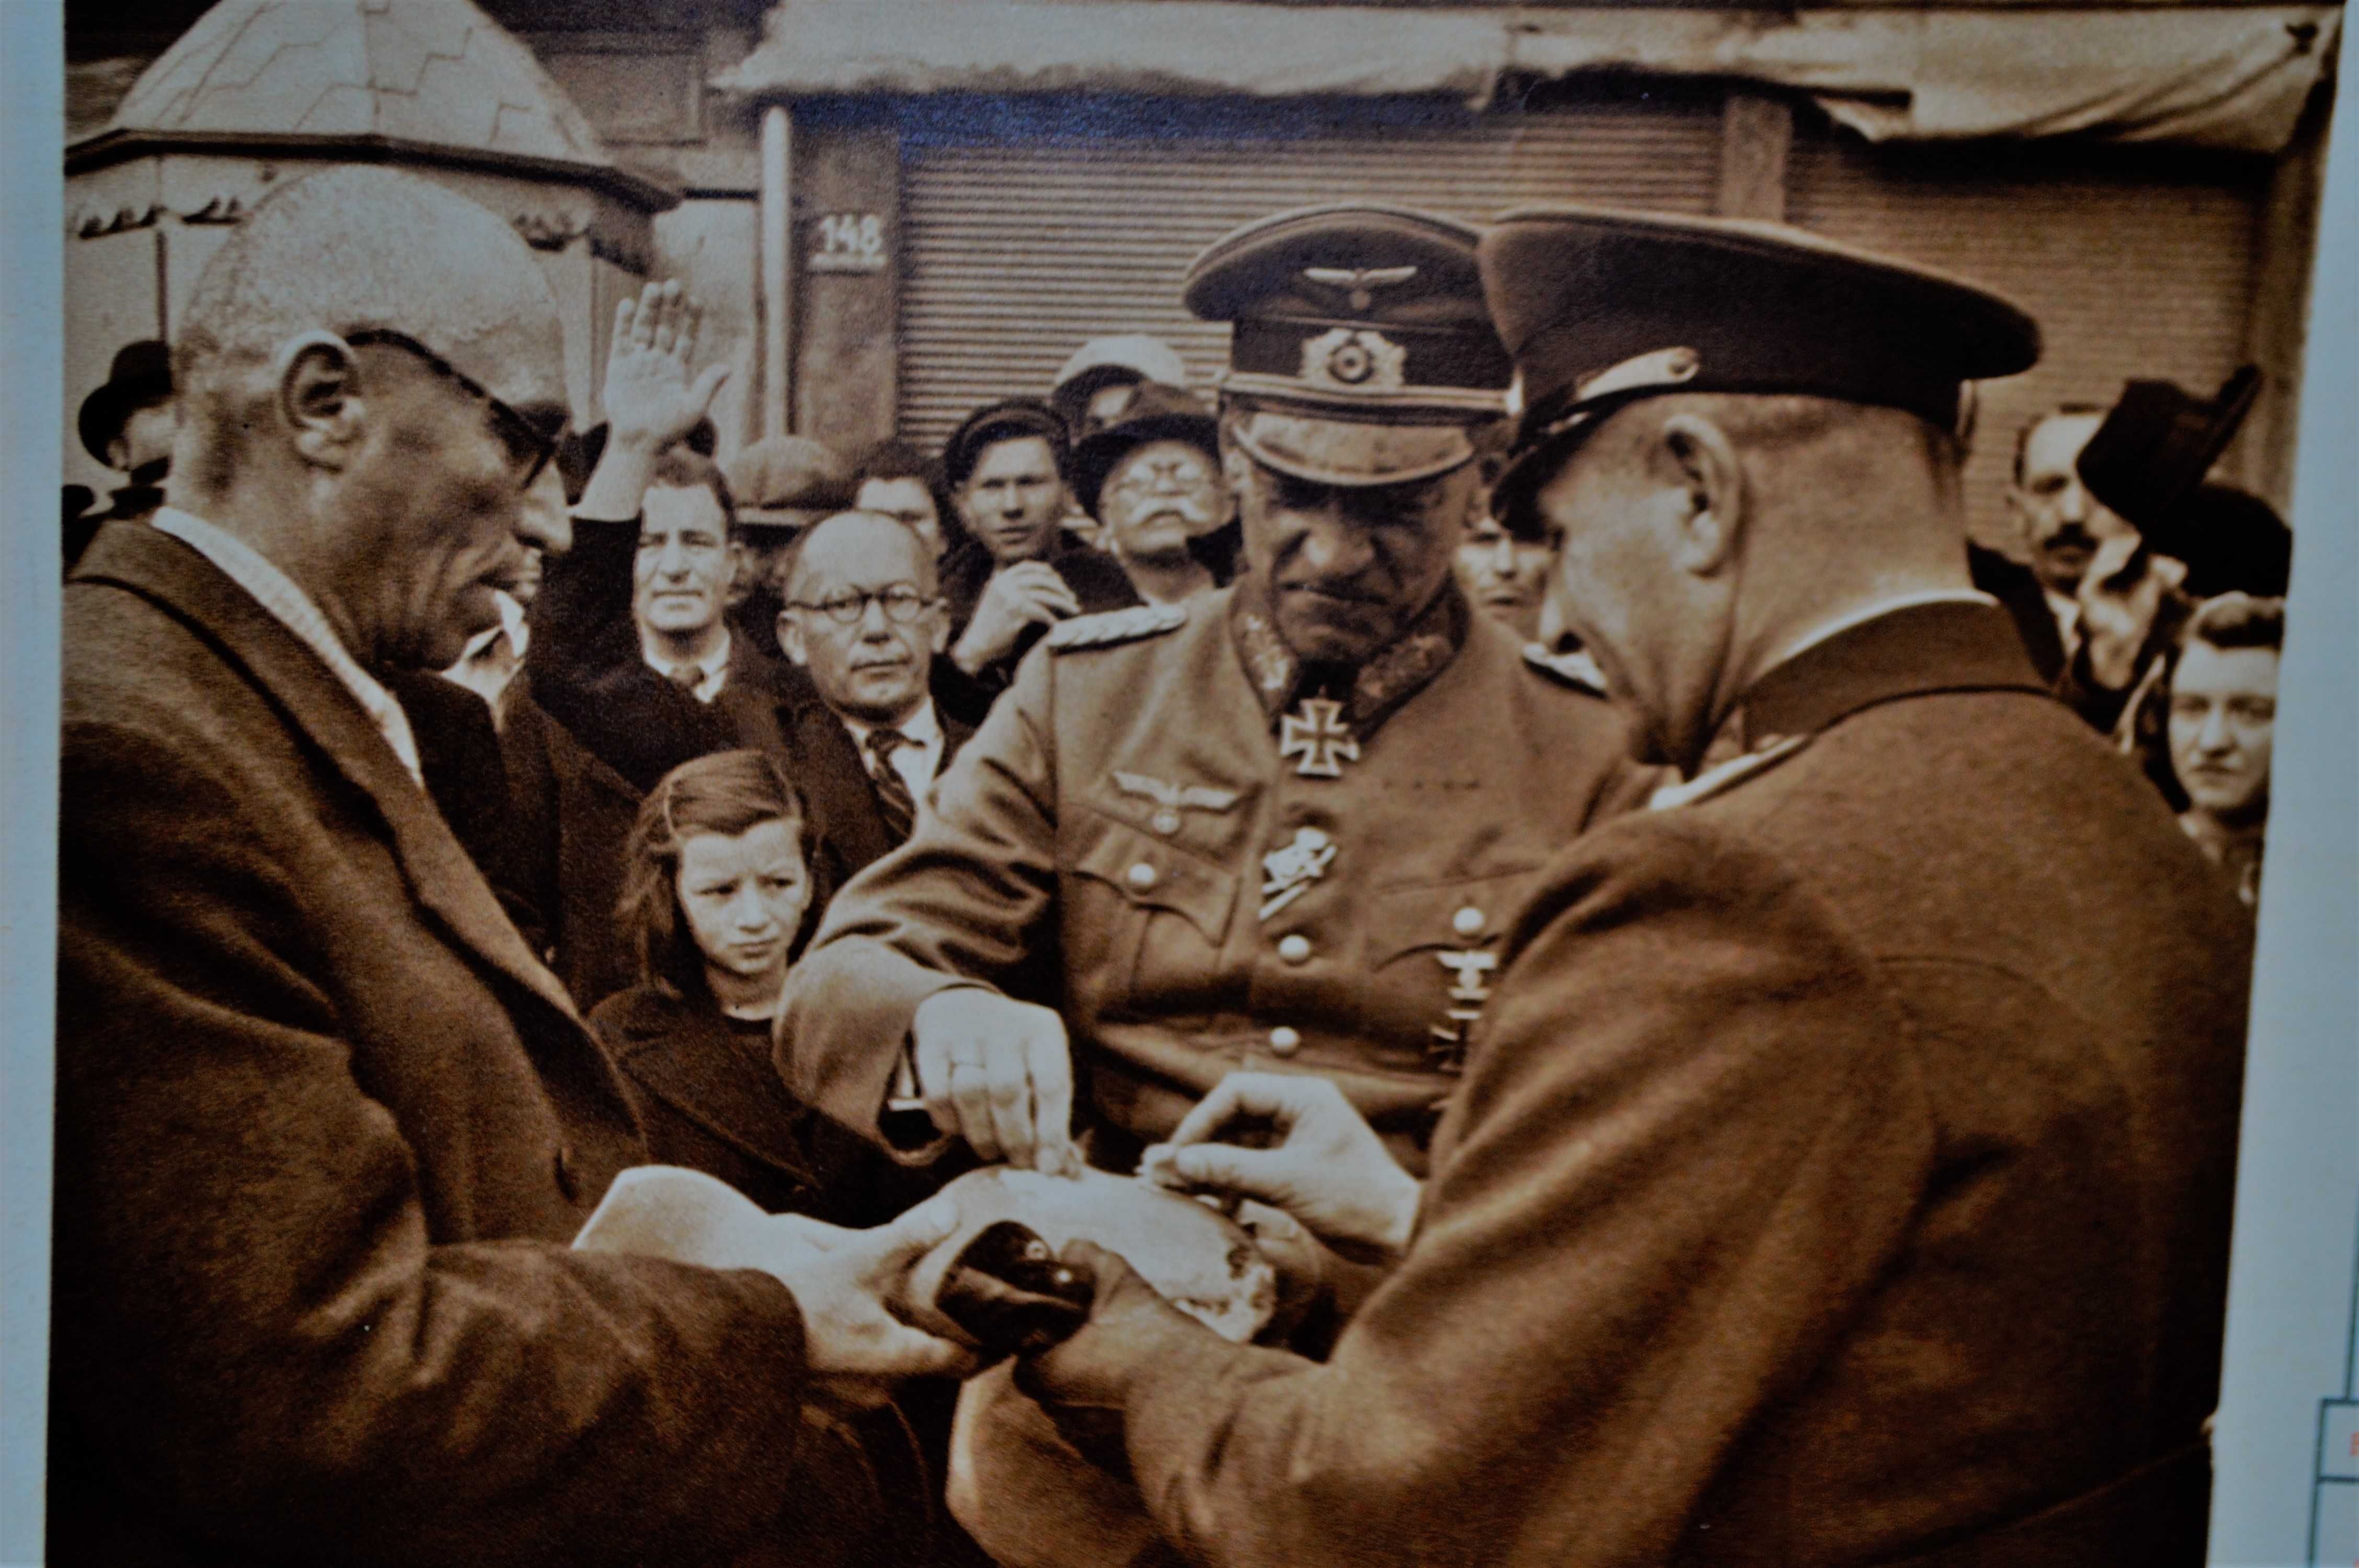 Календар Царство България 1942 година цар Борис Втора Световна Война